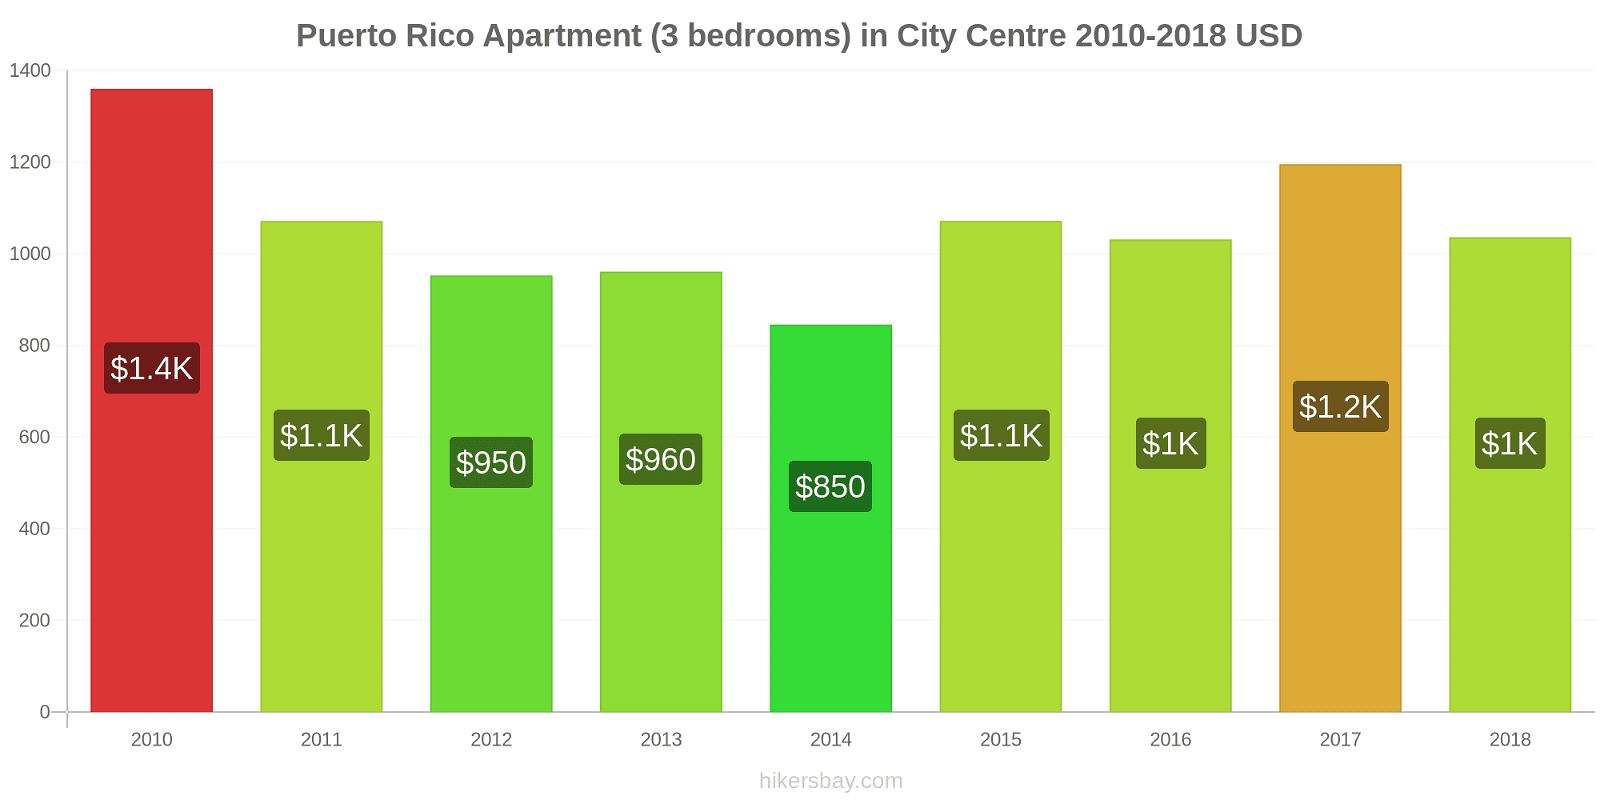 Puerto Rico price changes Apartment (3 bedrooms) in City Centre hikersbay.com